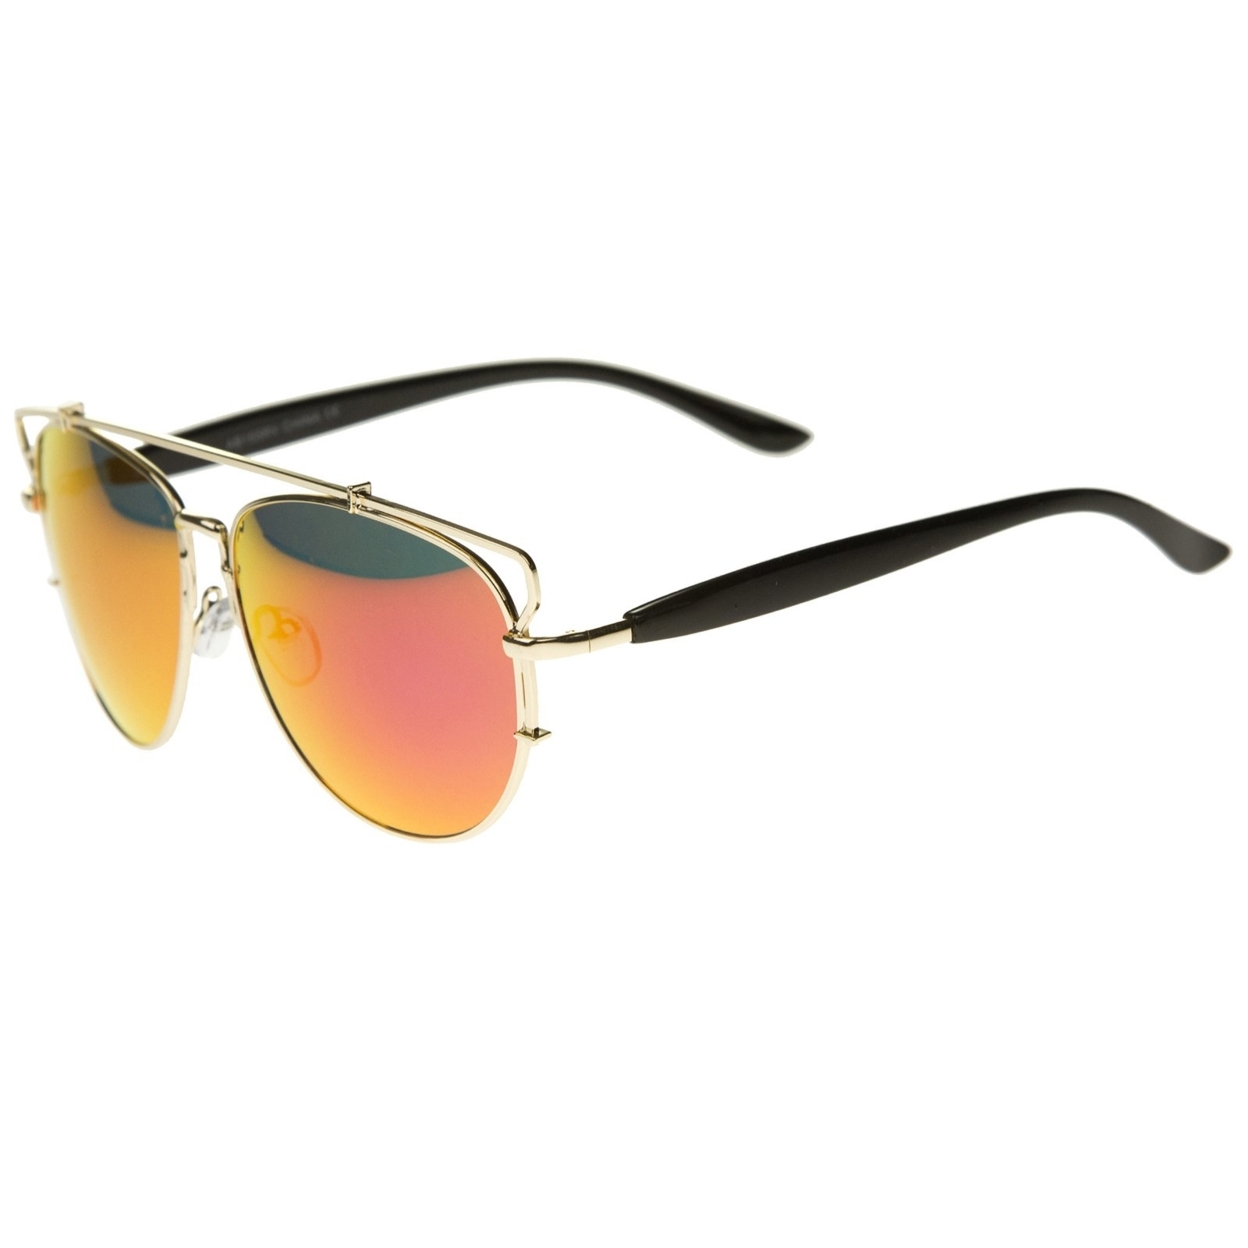 Modern Full Metal Crossbar Open Design Colored Mirror Aviator Sunglasses 58mm - Silver / Silver Mirror